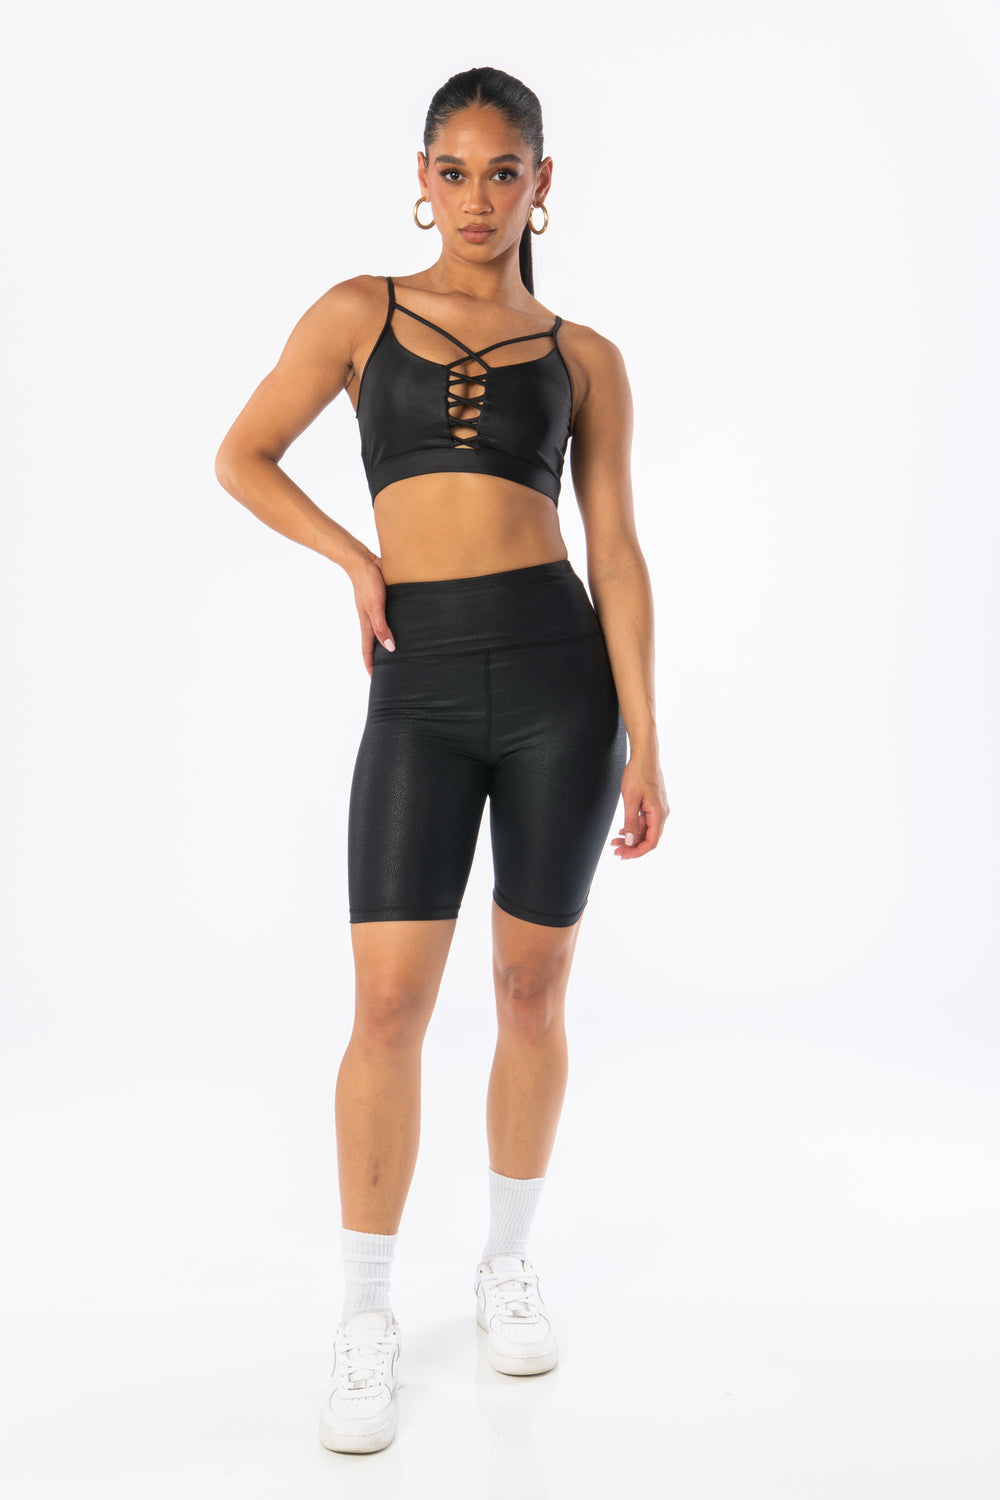 Black Shine Print Biker Shorts - Hypeach Active Activewear HYPEACH 